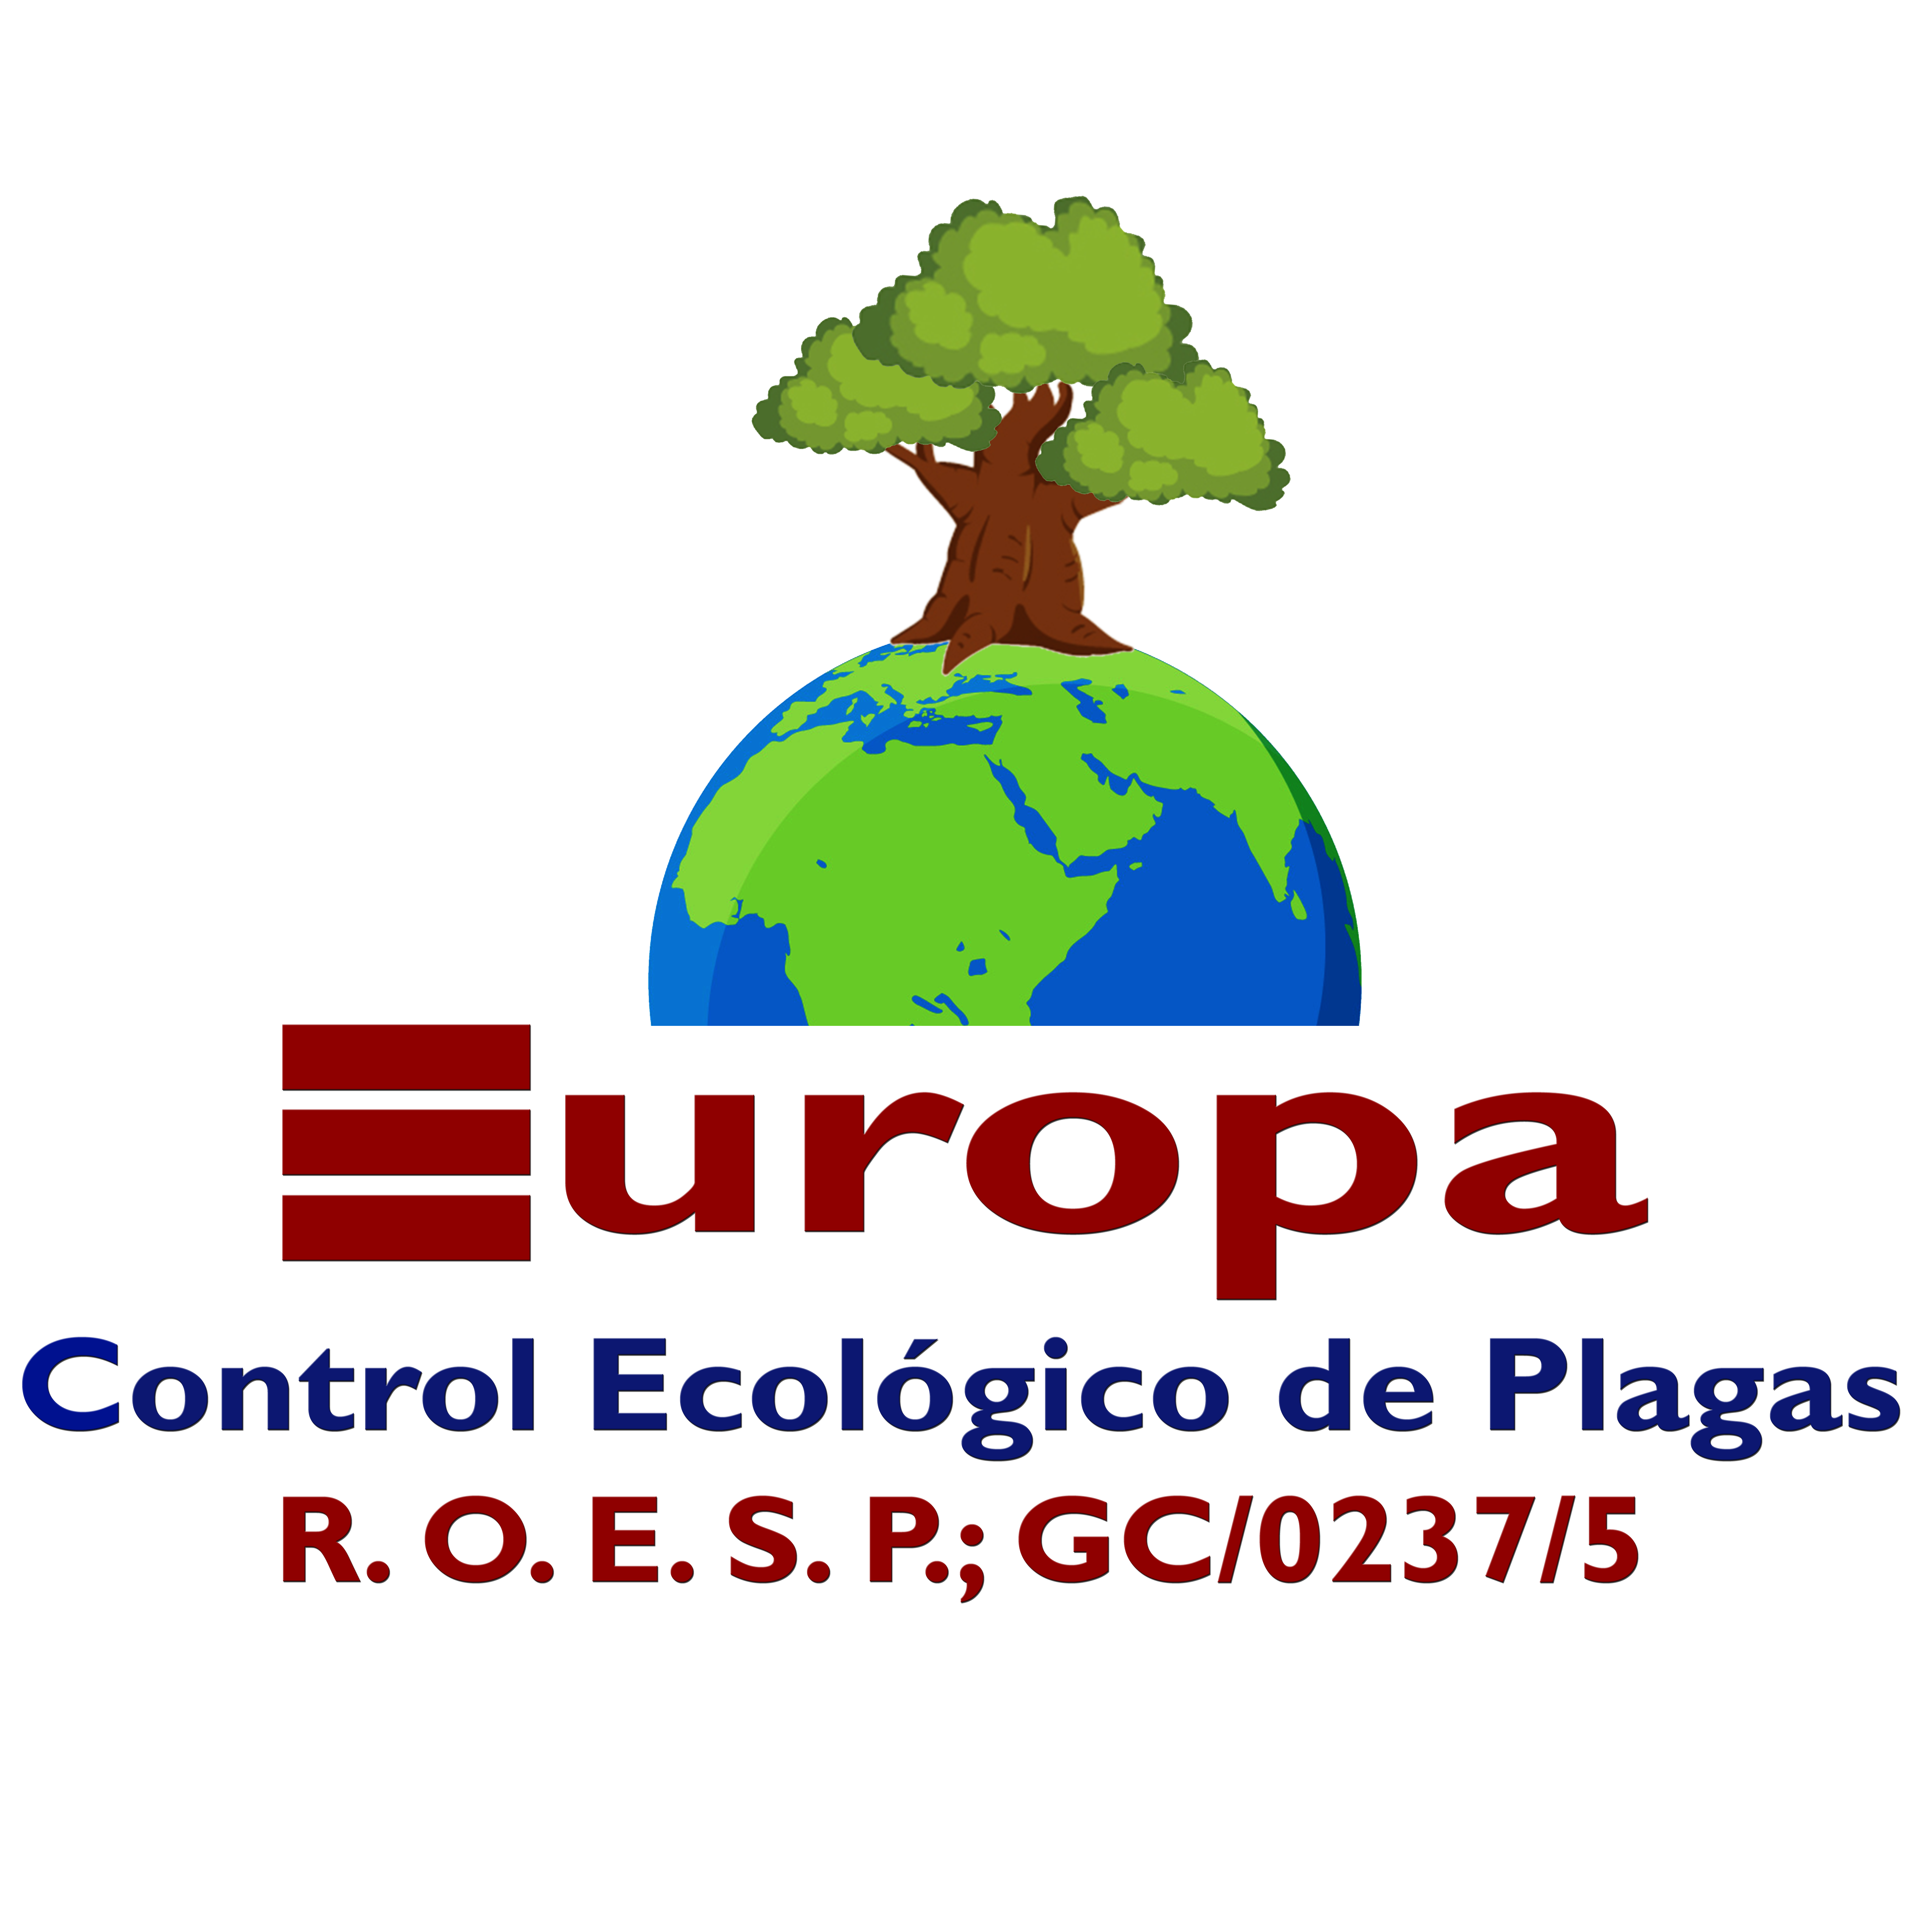 Images Europa Control Ecológico de Plagas